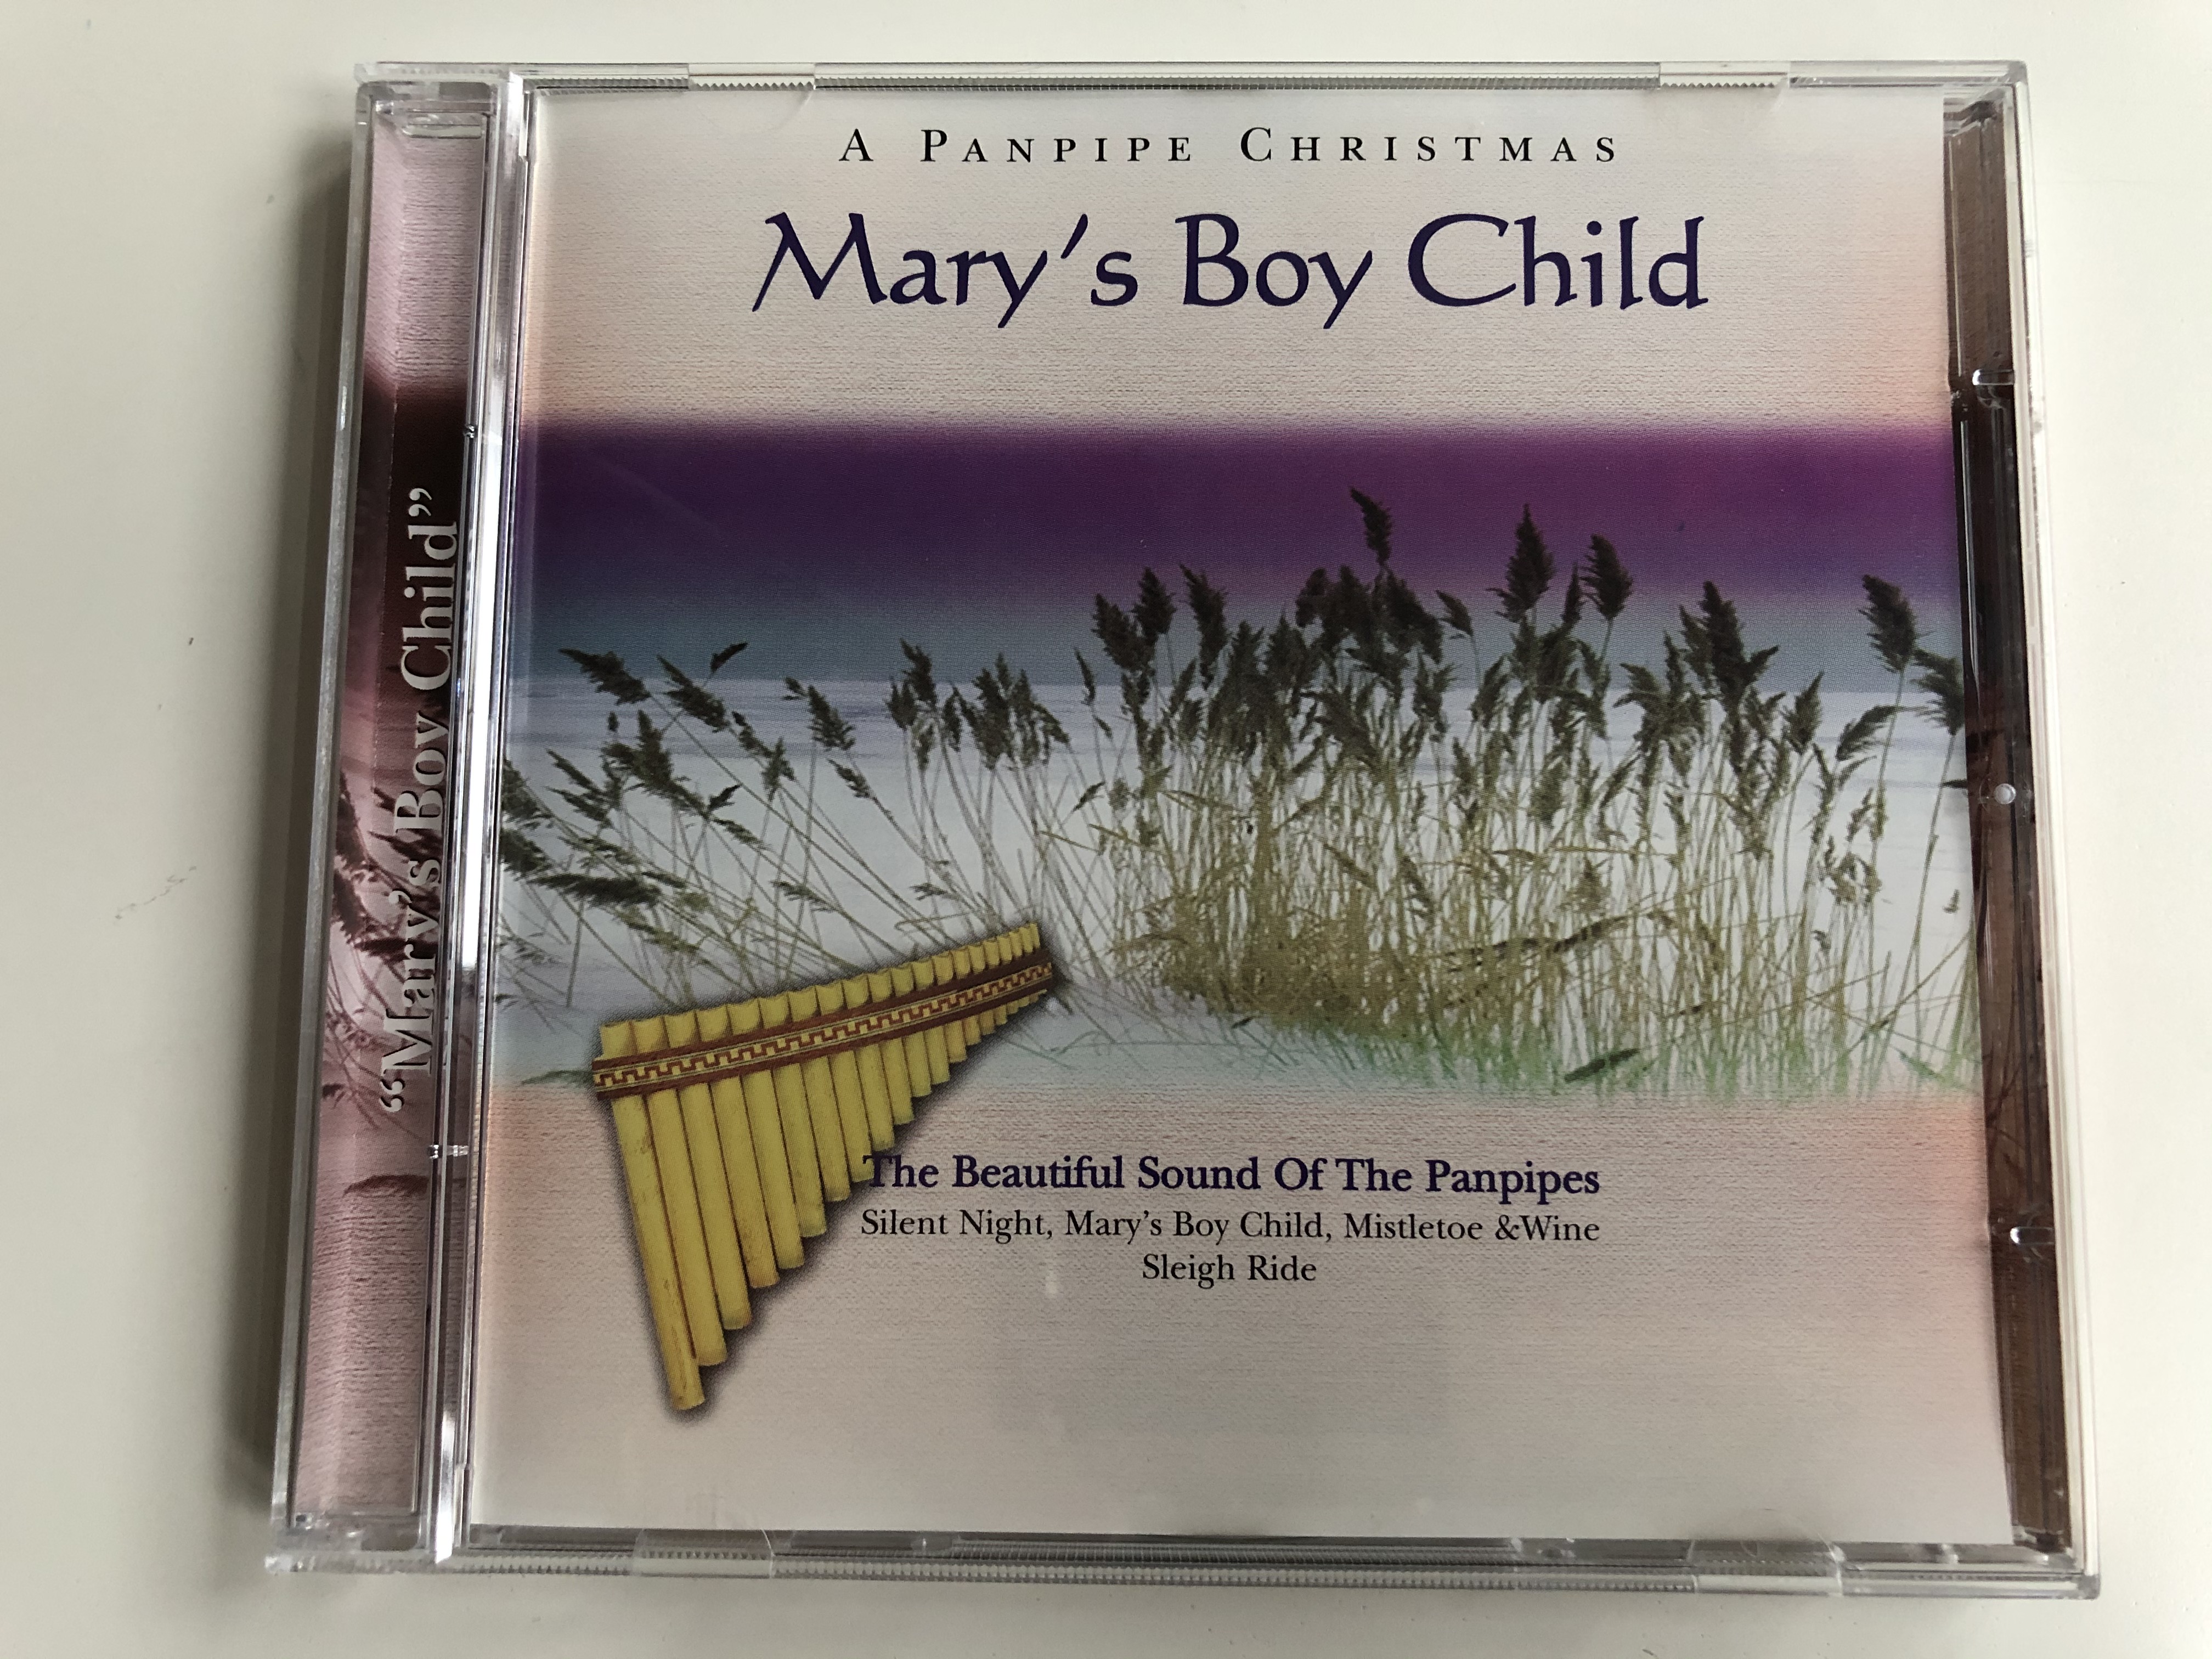 a-panpipe-christmas-mary-s-boy-child-the-beautiful-sound-of-the-panpipes-silent-night-mary-s-boy-child-mistletoe-wine-sleigh-ride-jingle-audio-cd-1997-12030-2-1-.jpg